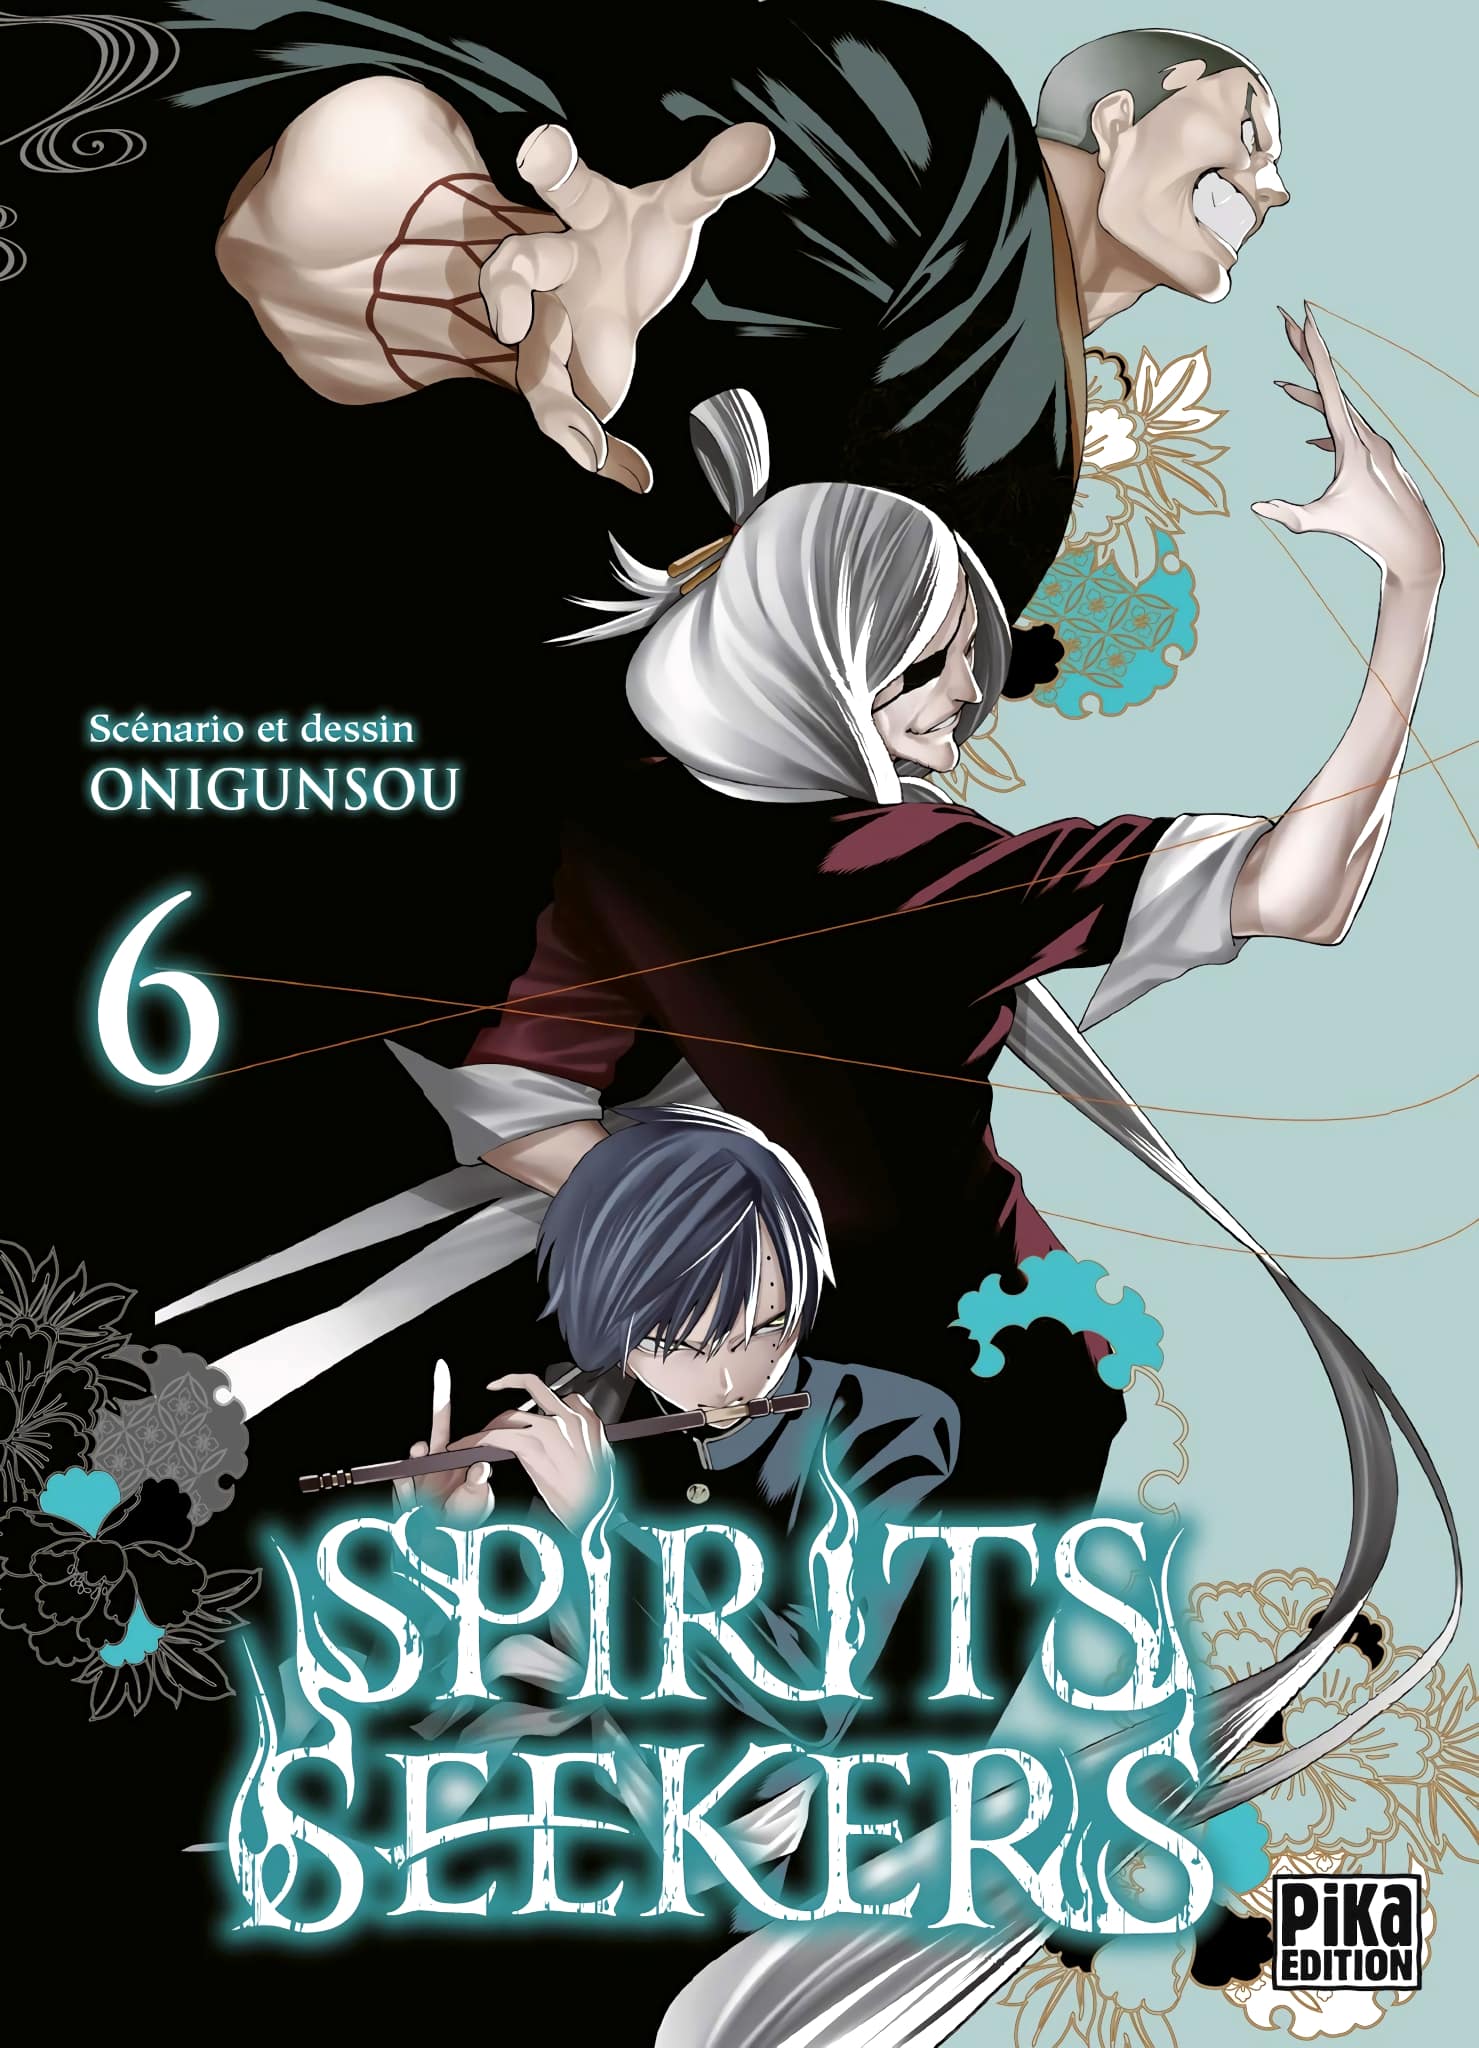 Tome 6 du manga Spirits Seekers